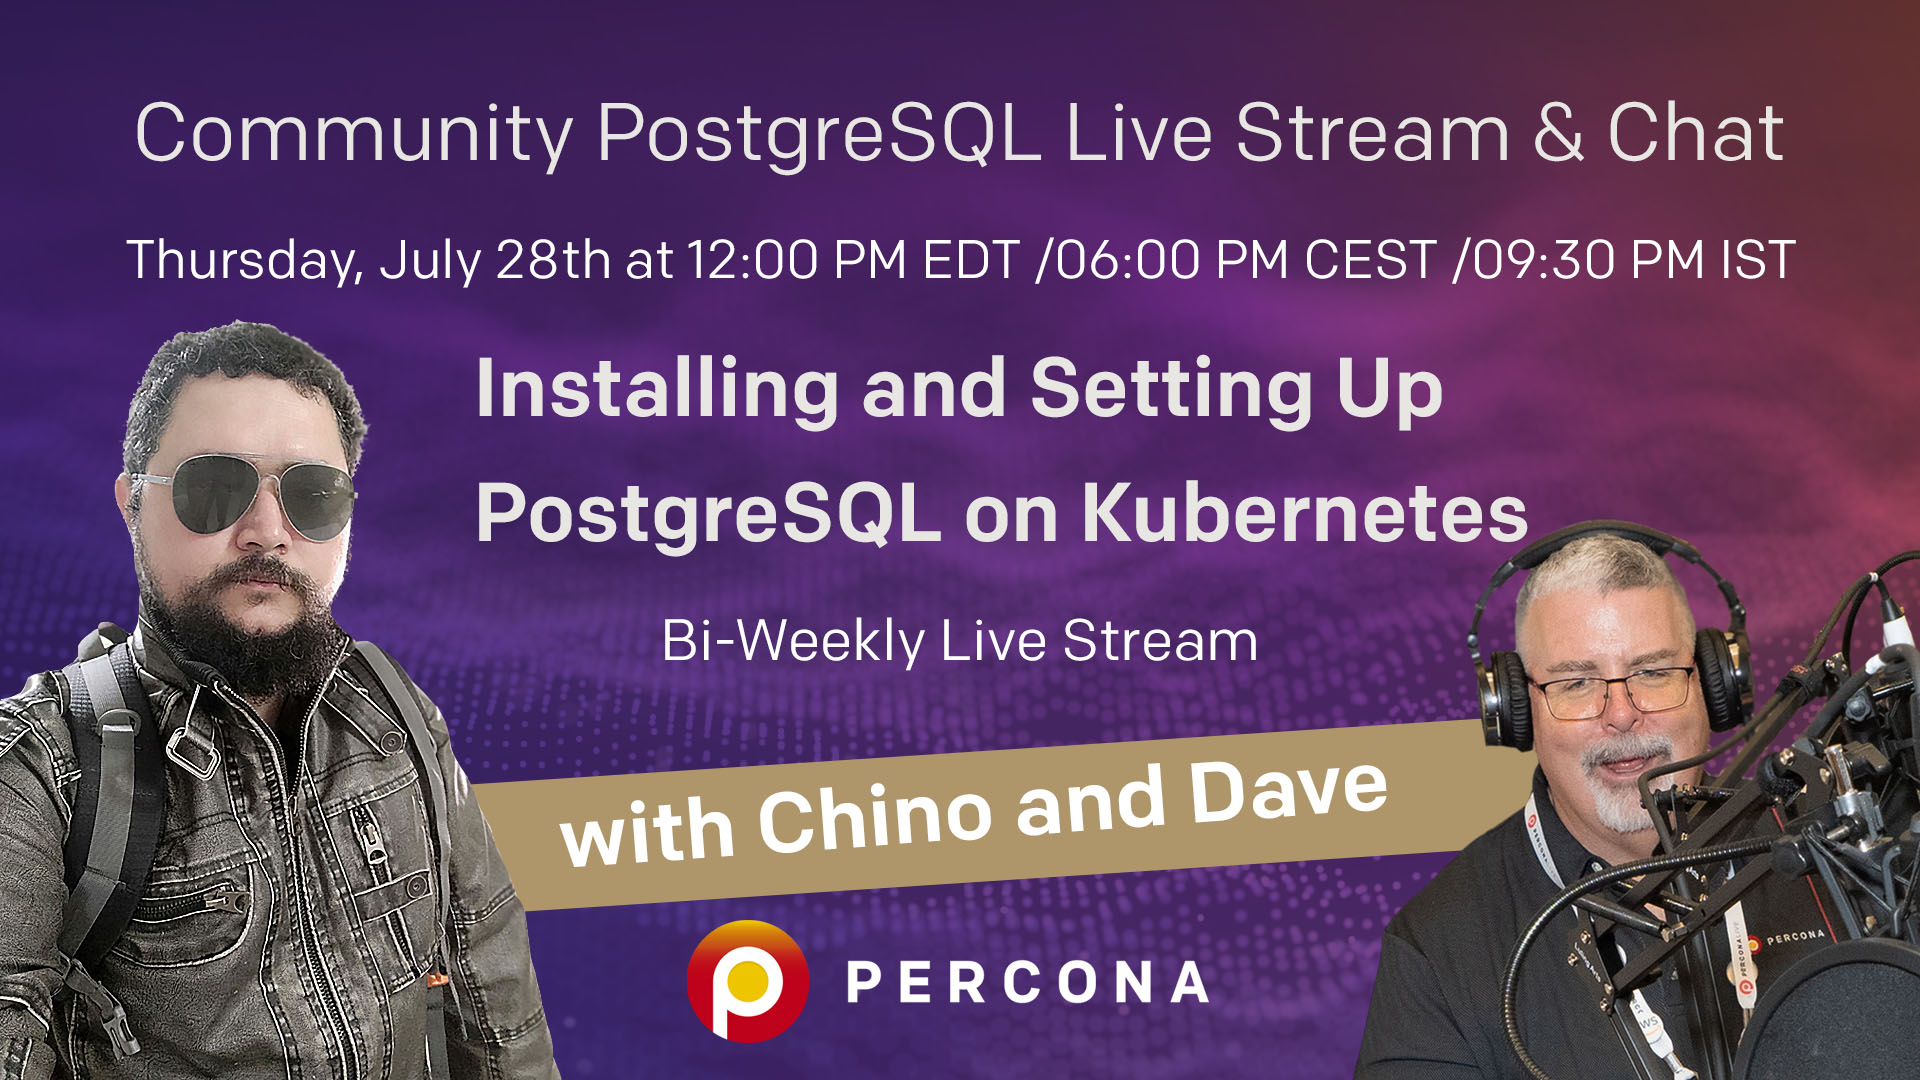 Percona Community PostgreSQL Live Stream & Chat - July 28th